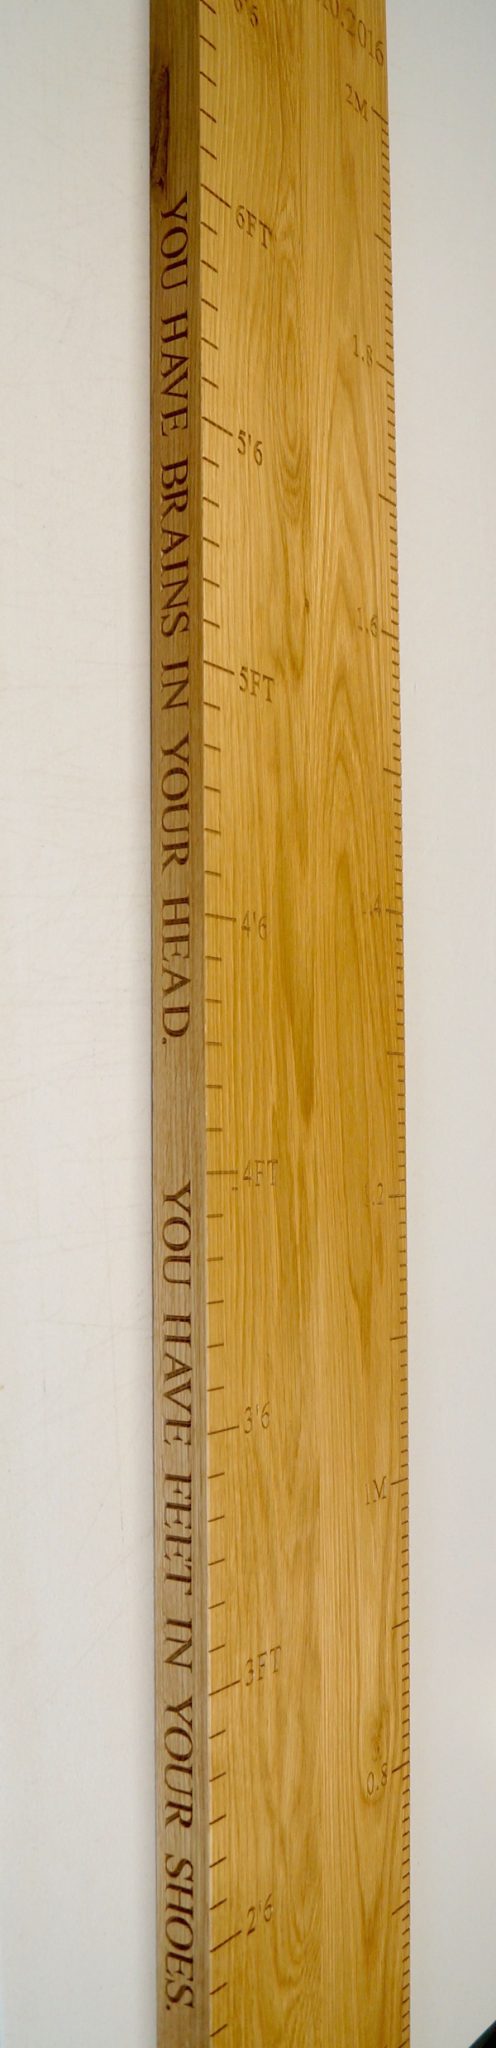 personalised-wood-height-charts-uk-makemesomethingspecial.com